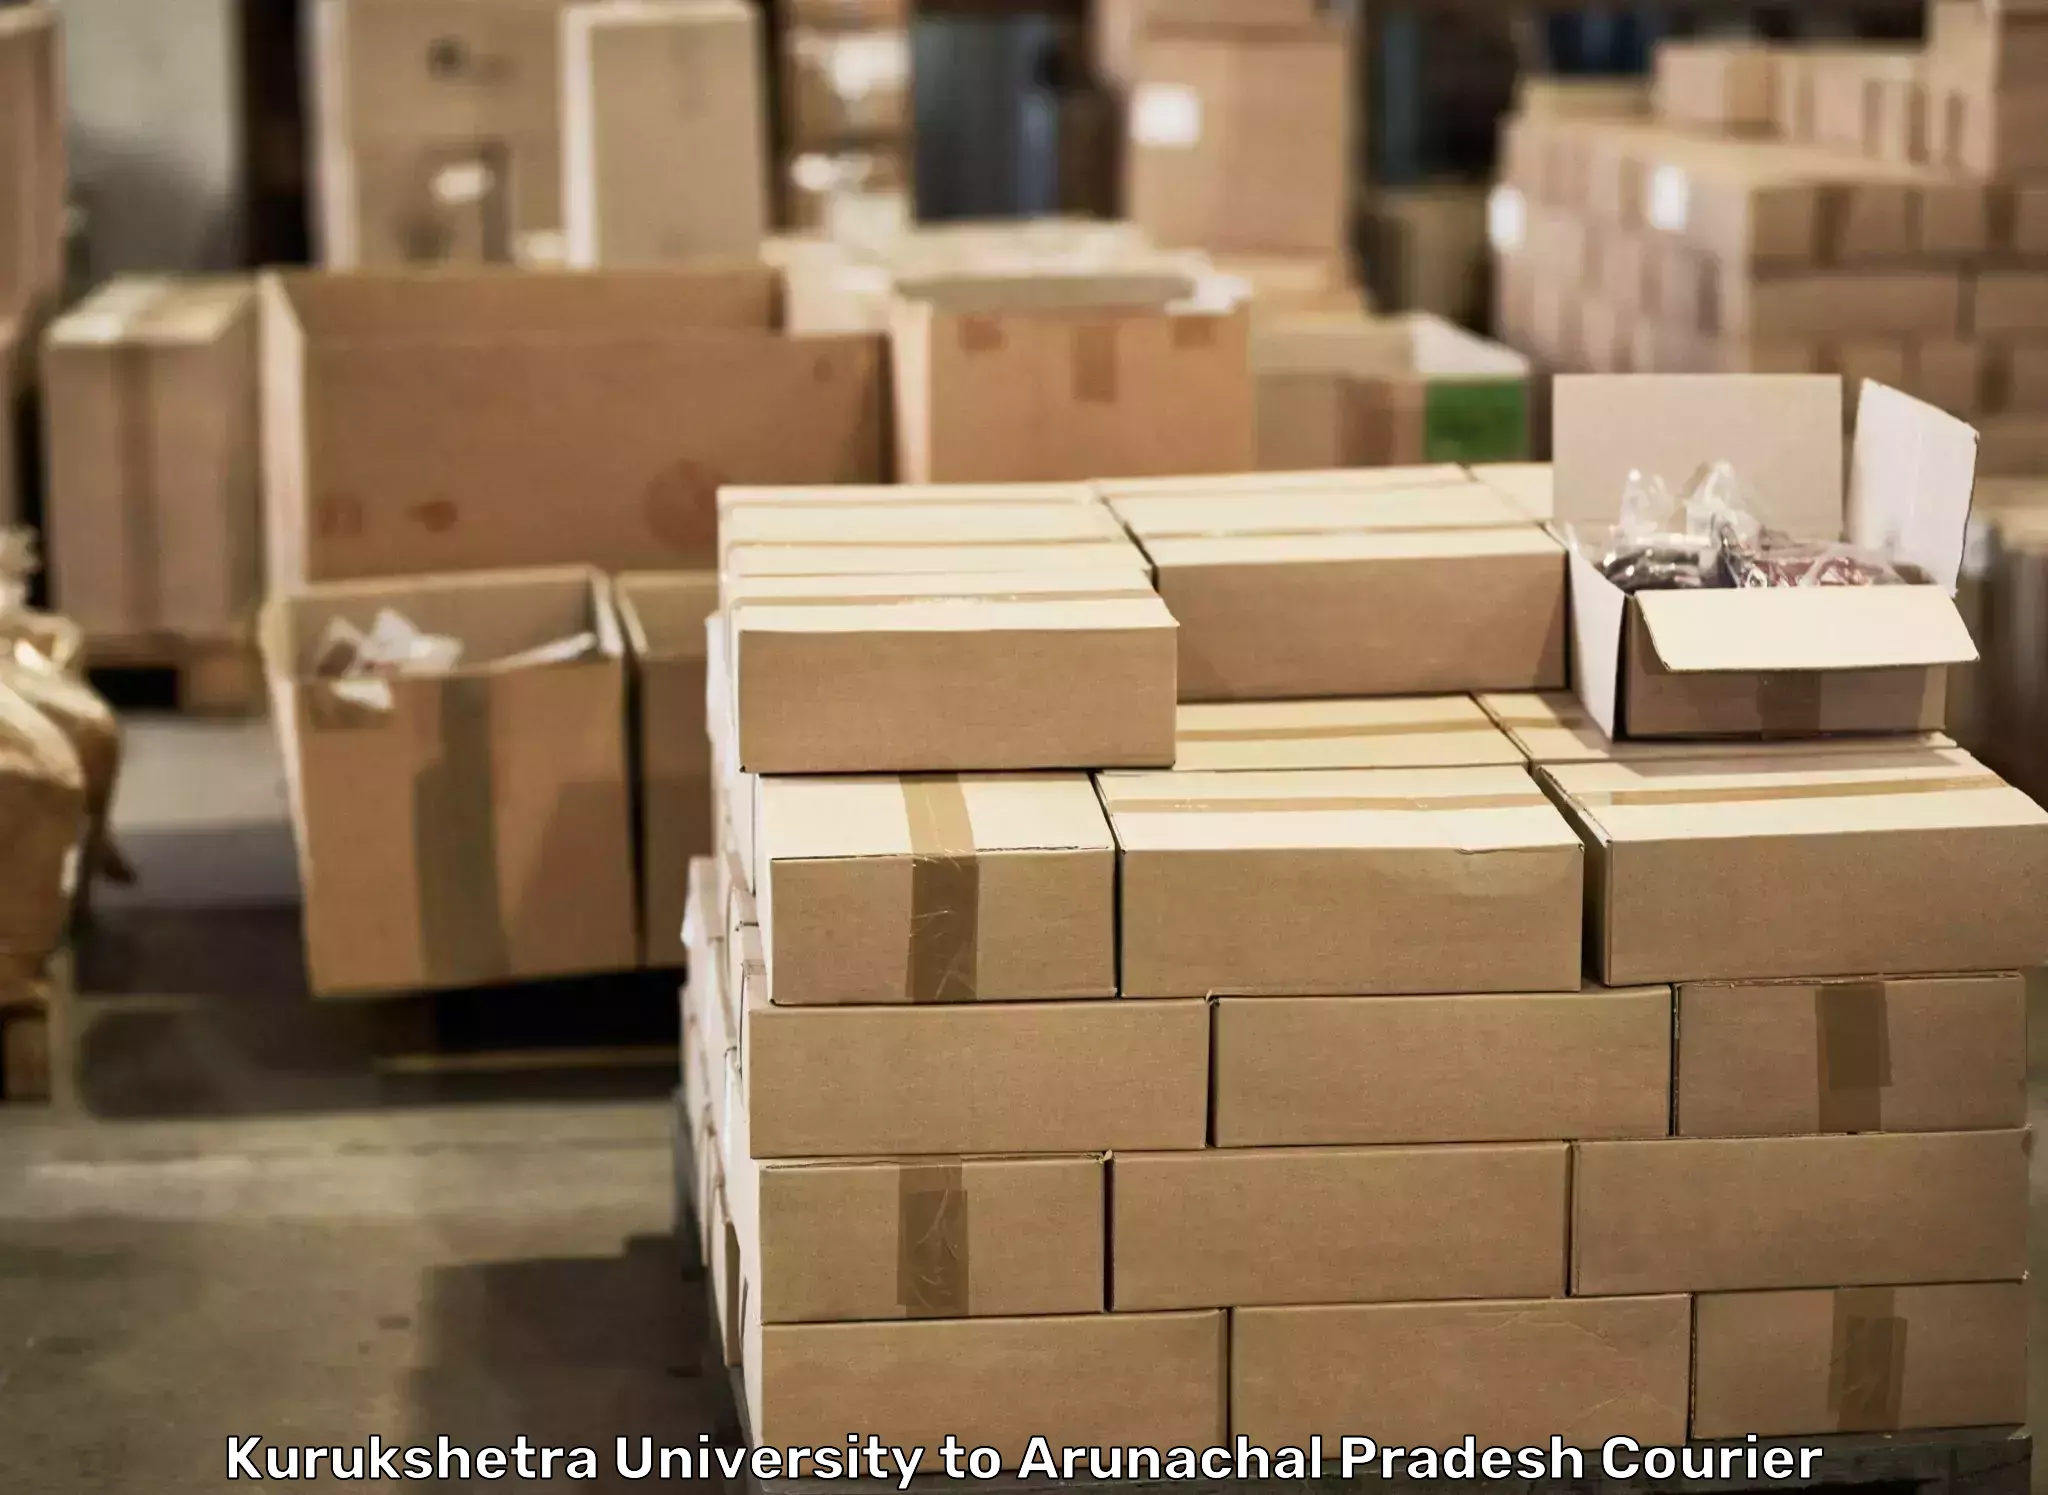 Furniture delivery service Kurukshetra University to Chowkham